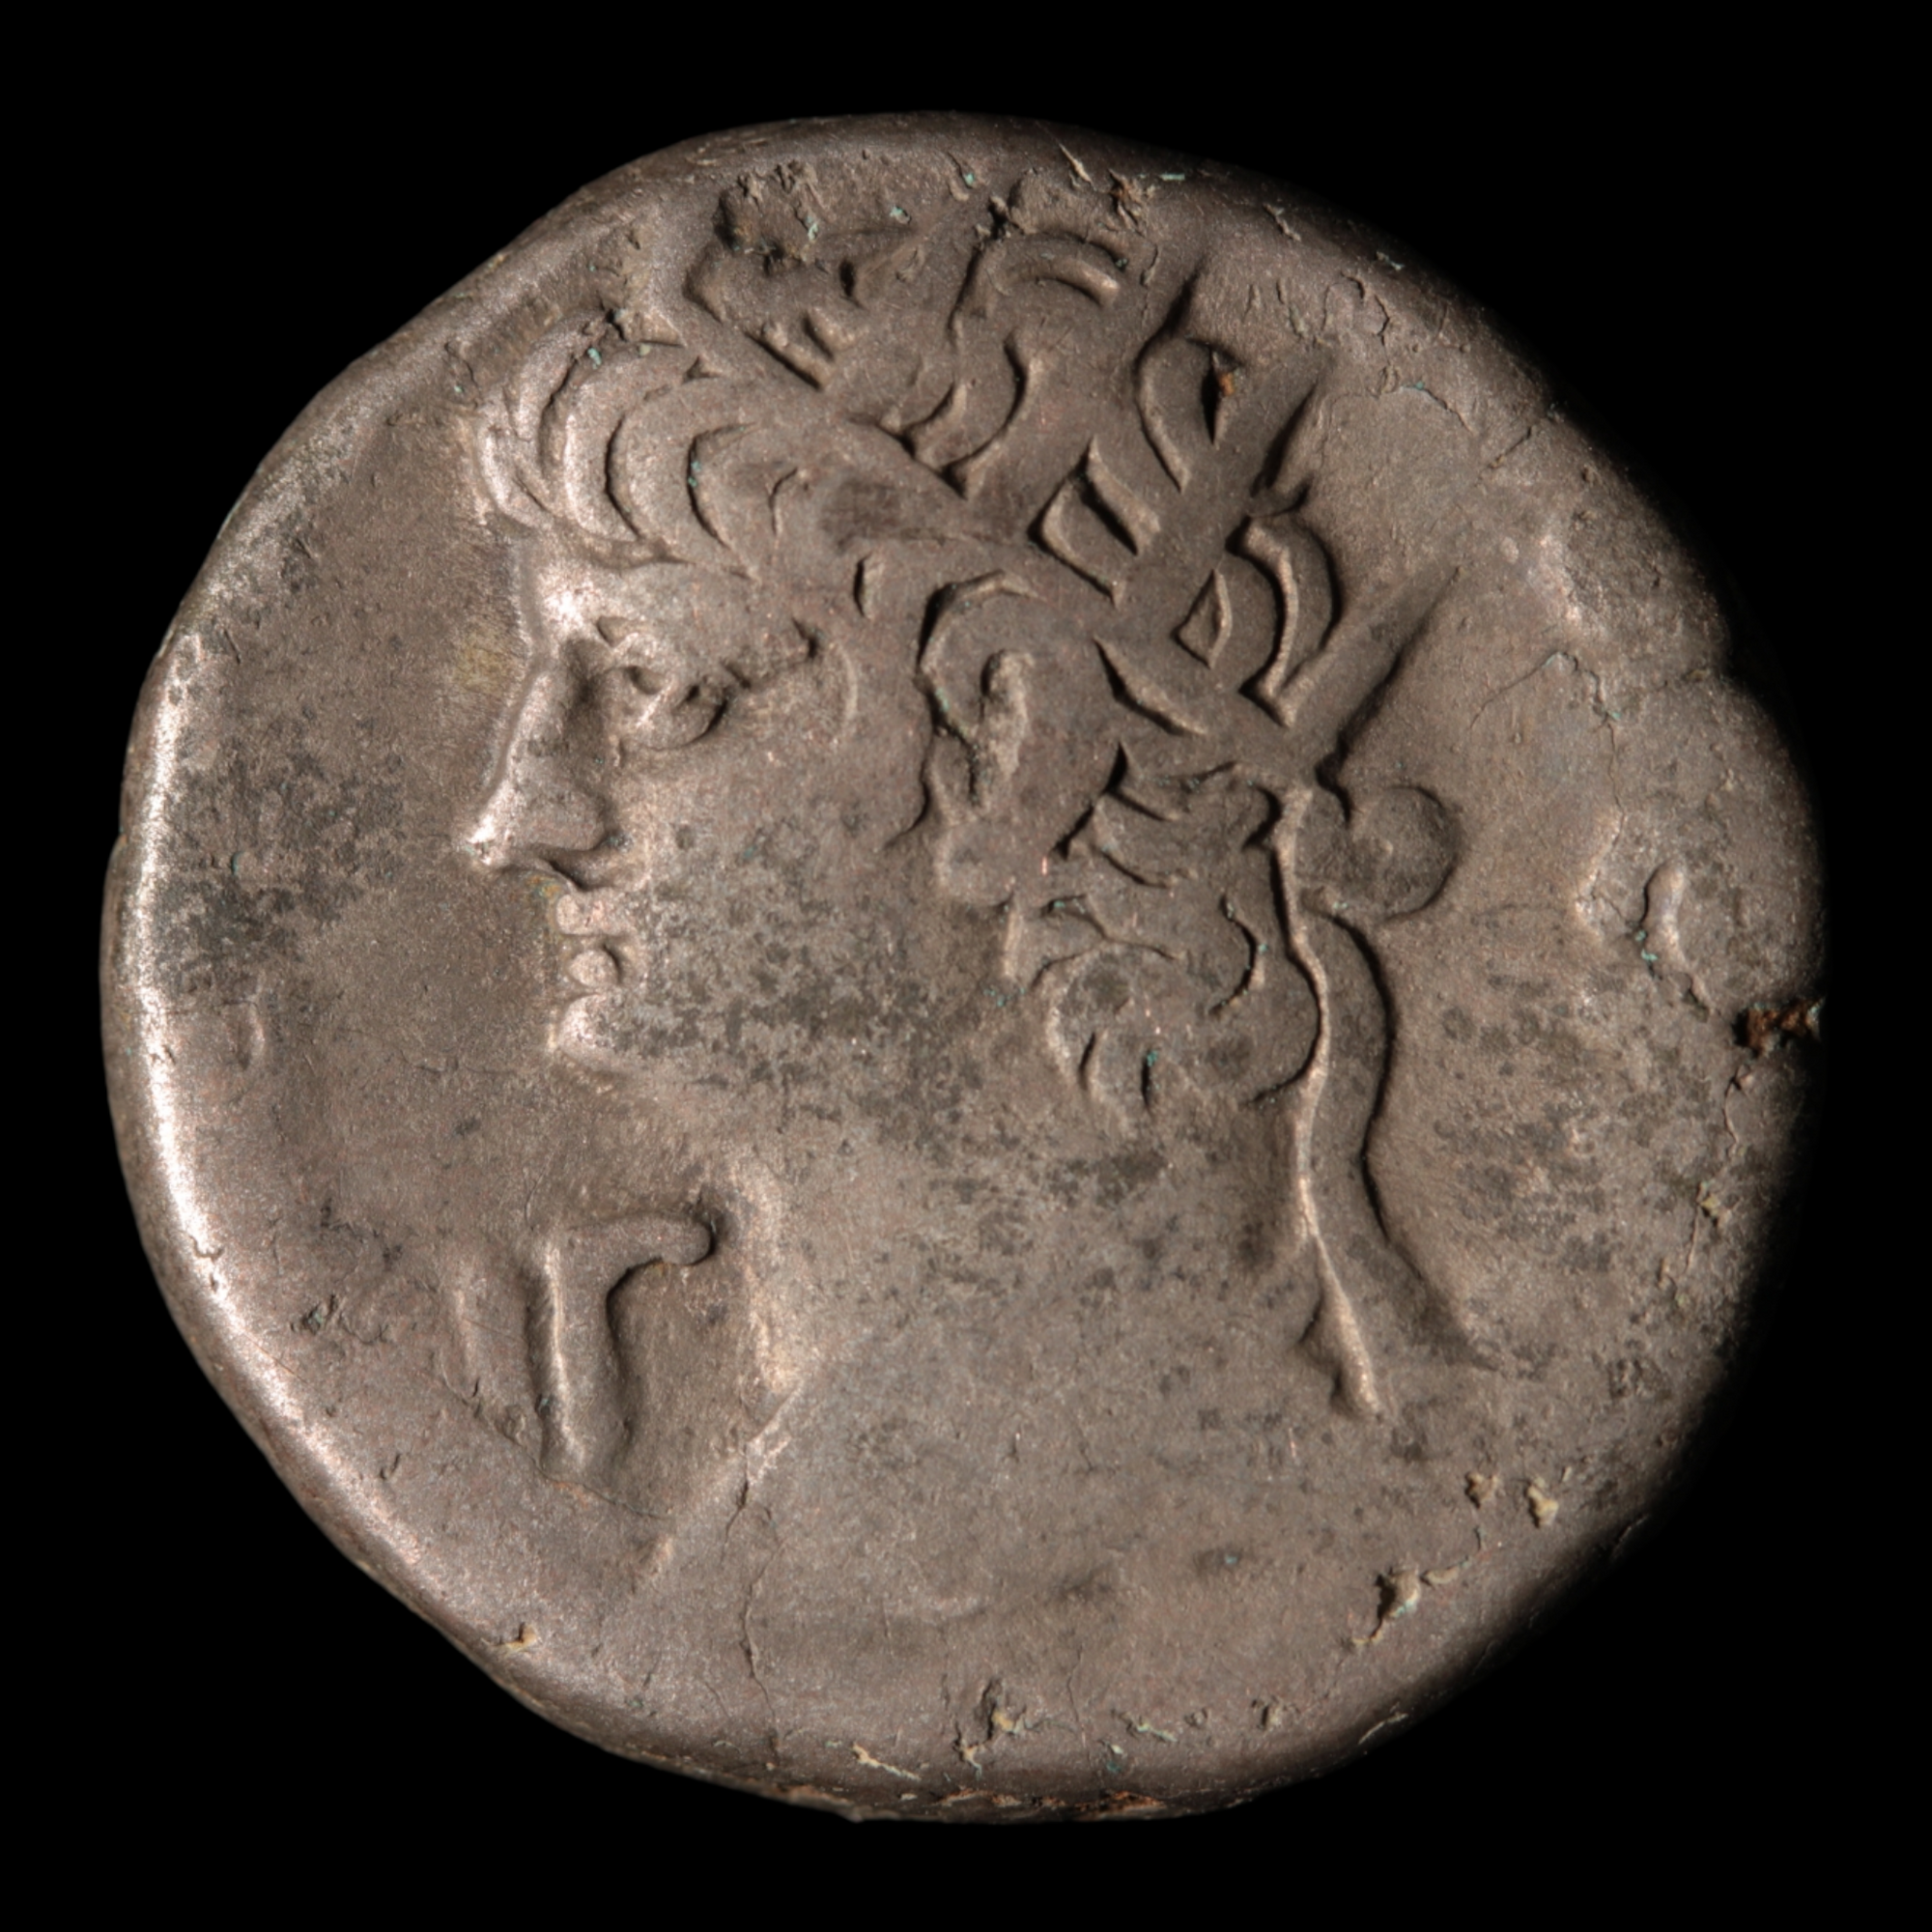 Emperor Nero Tetradrachm (#1) - 54 to 68 CE - Roman Egypt